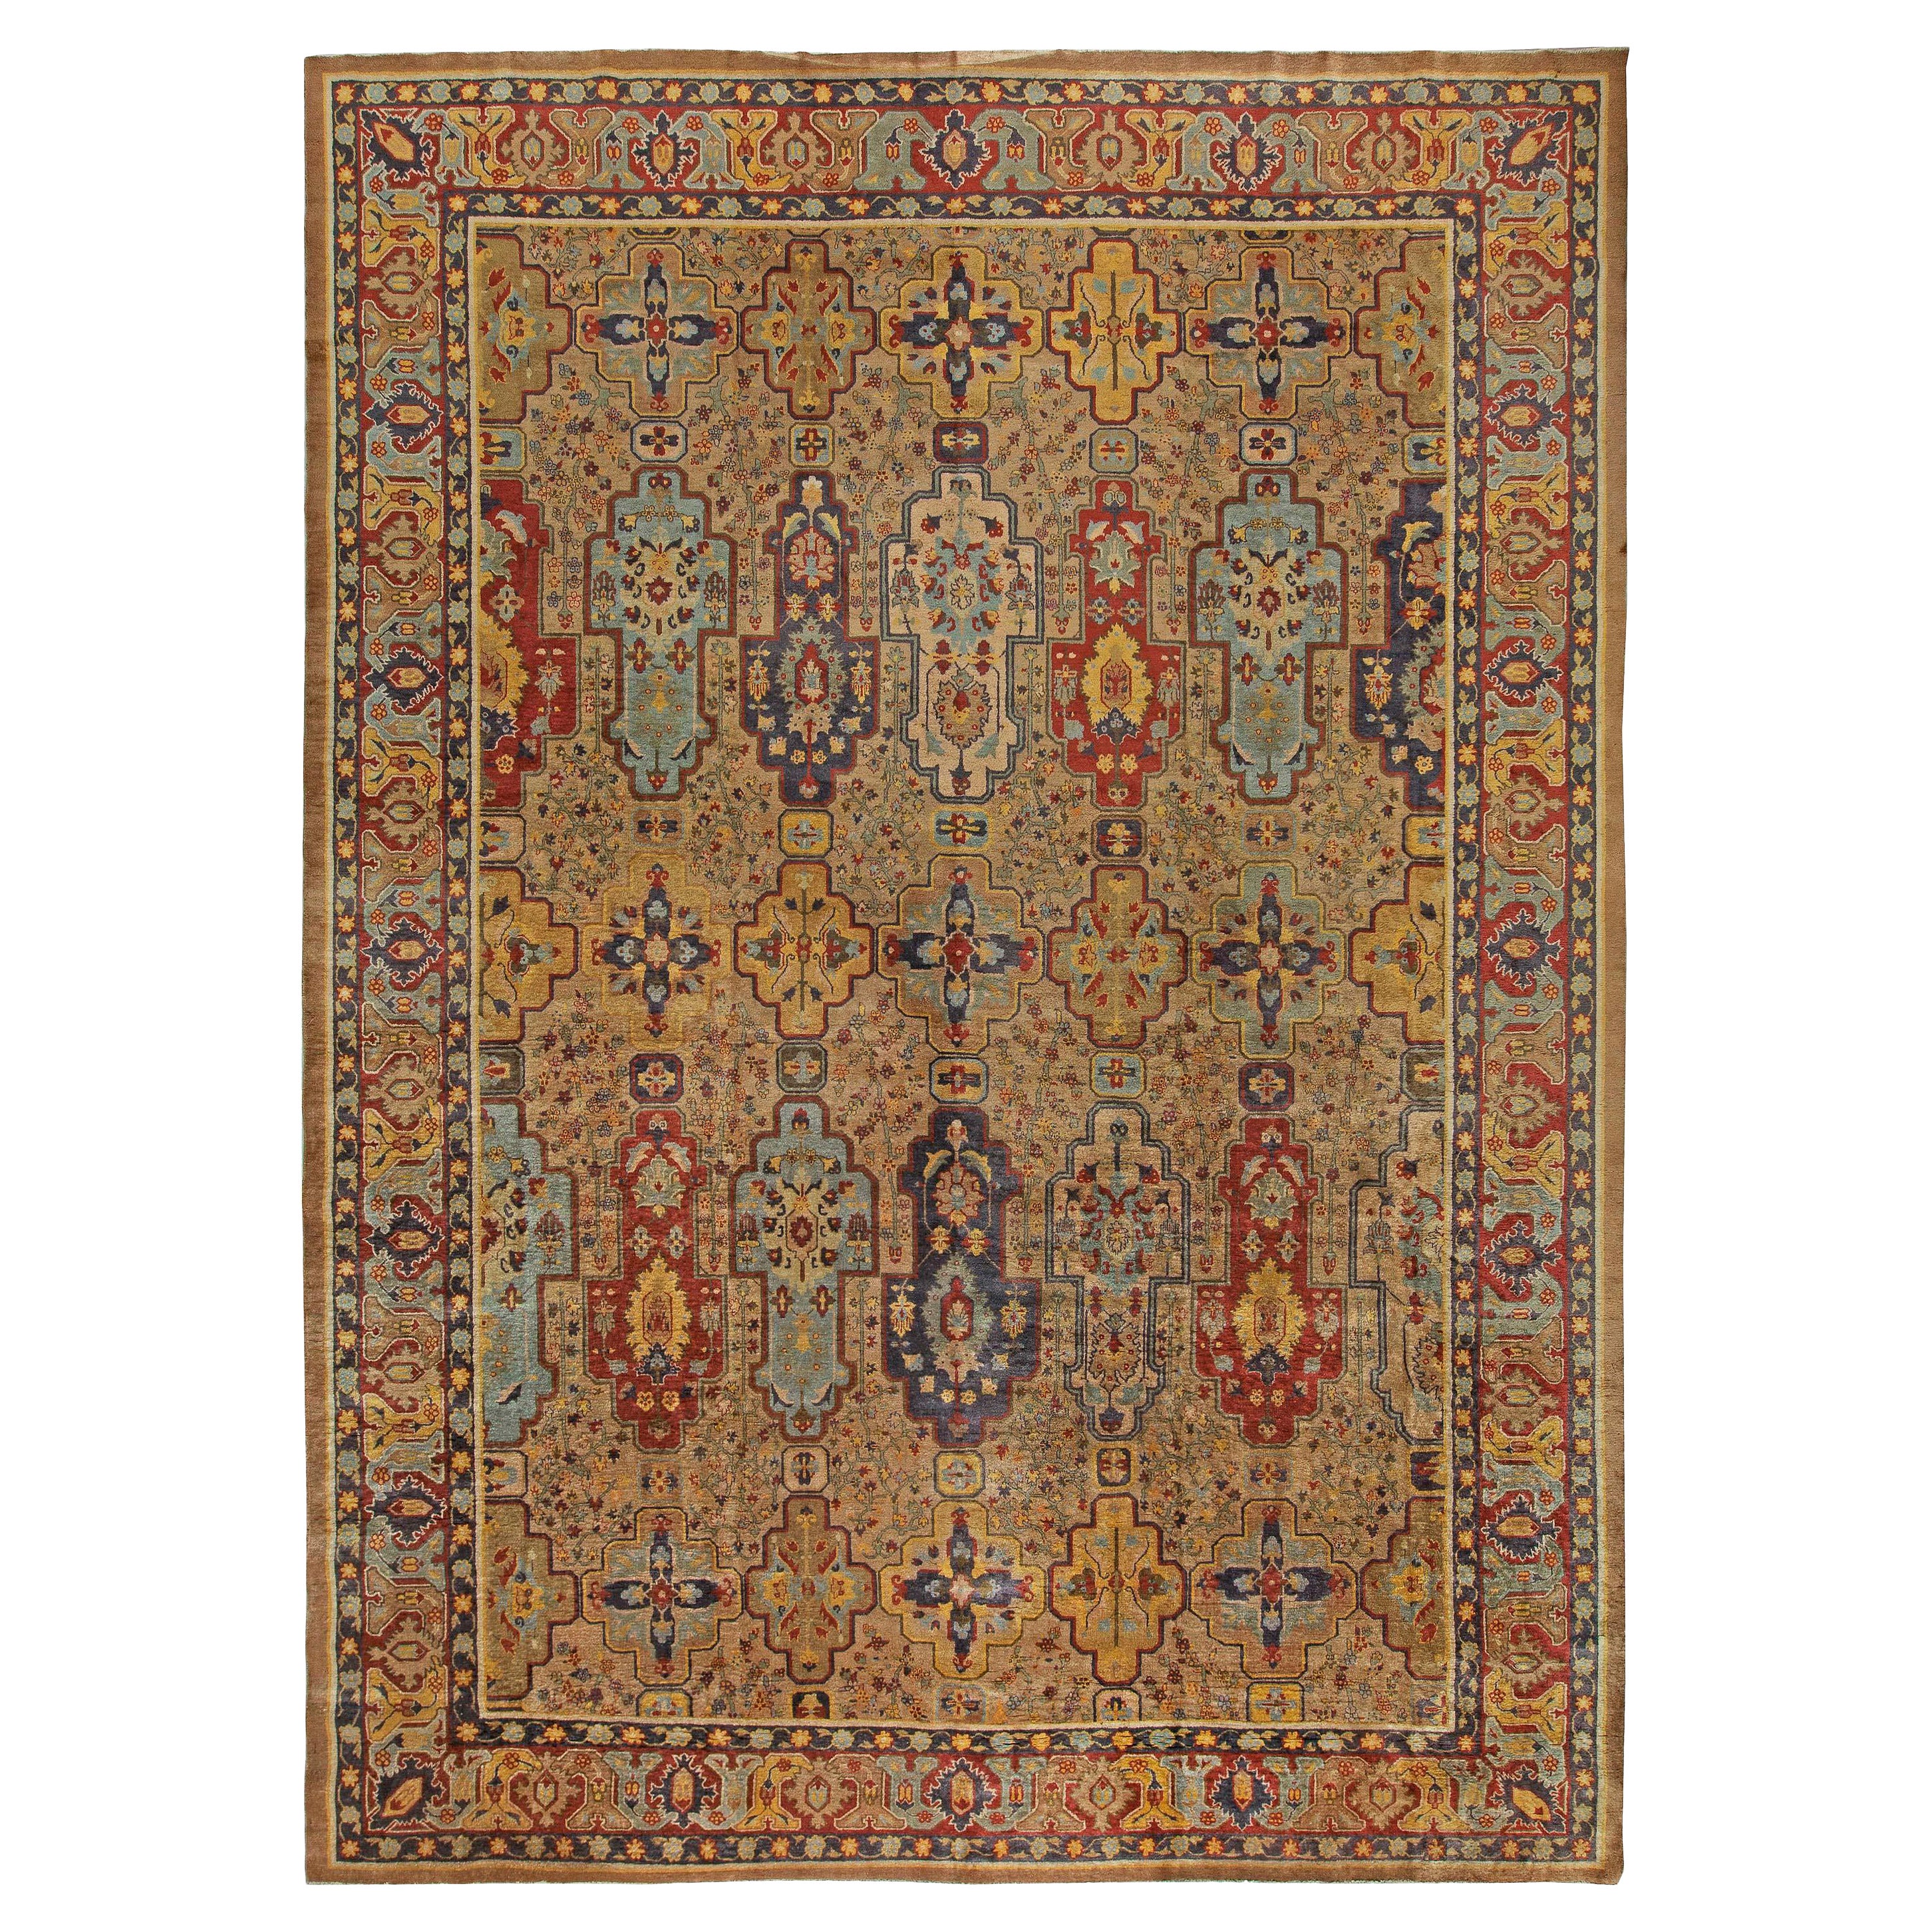 Early 20th Century Indian Handmade Wool Carpet